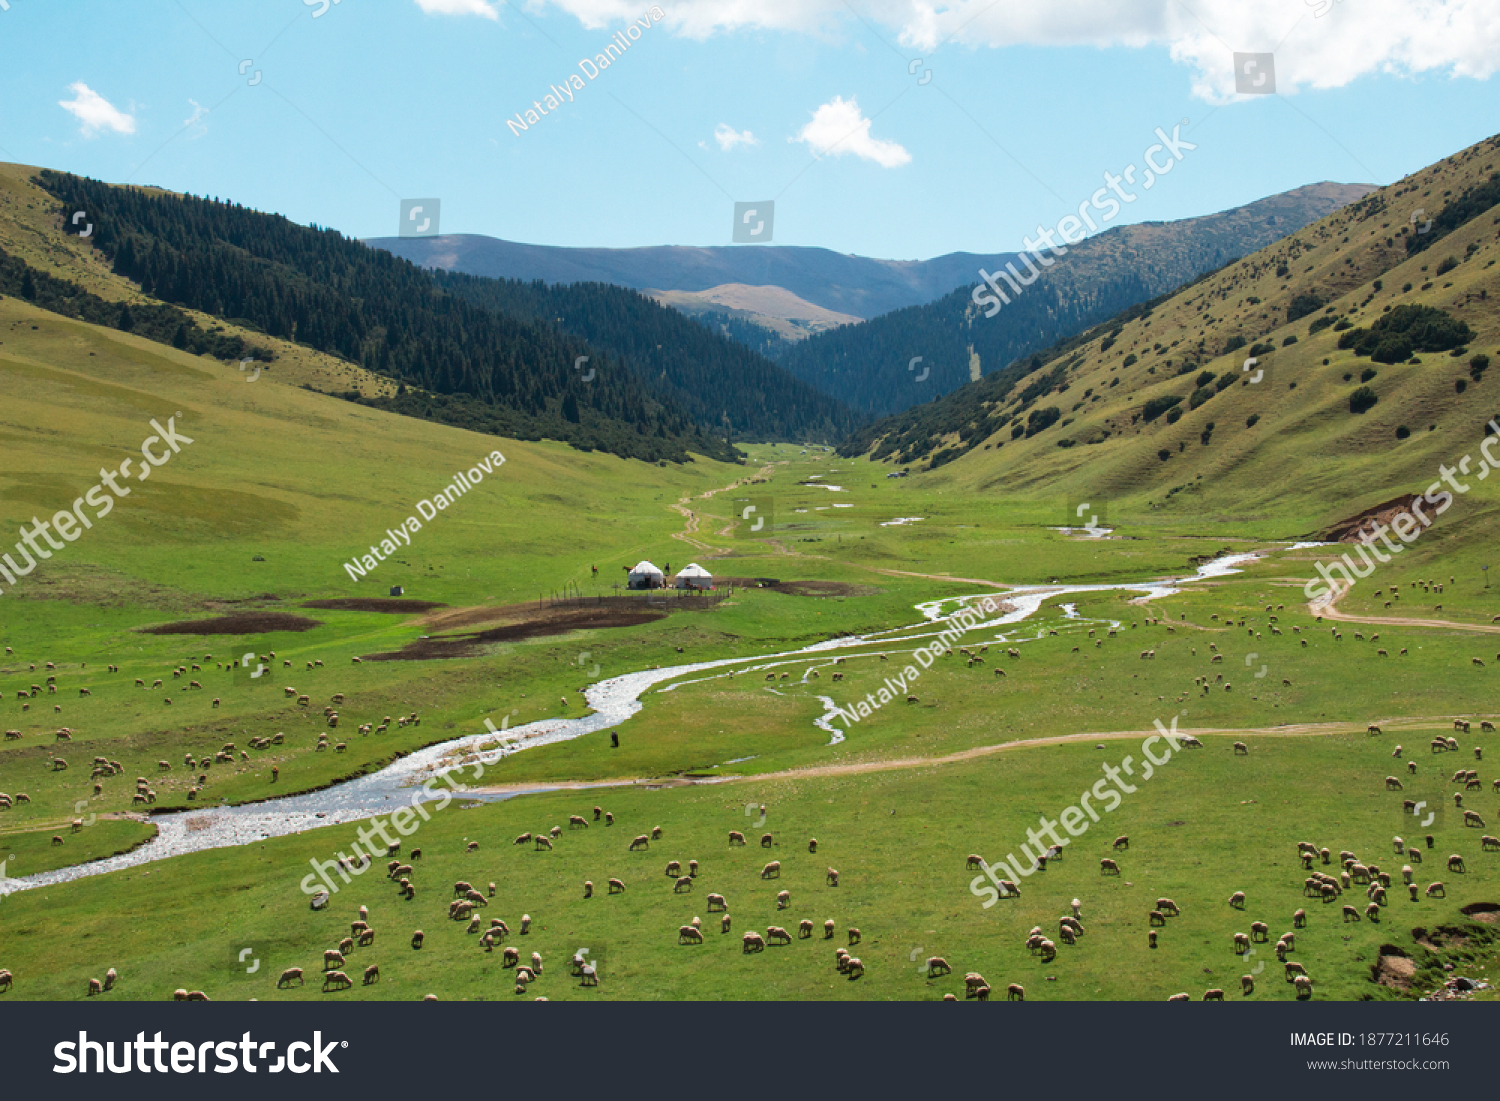 Plateau mountains Images, Stock Photos & Vectors | Shutterstock